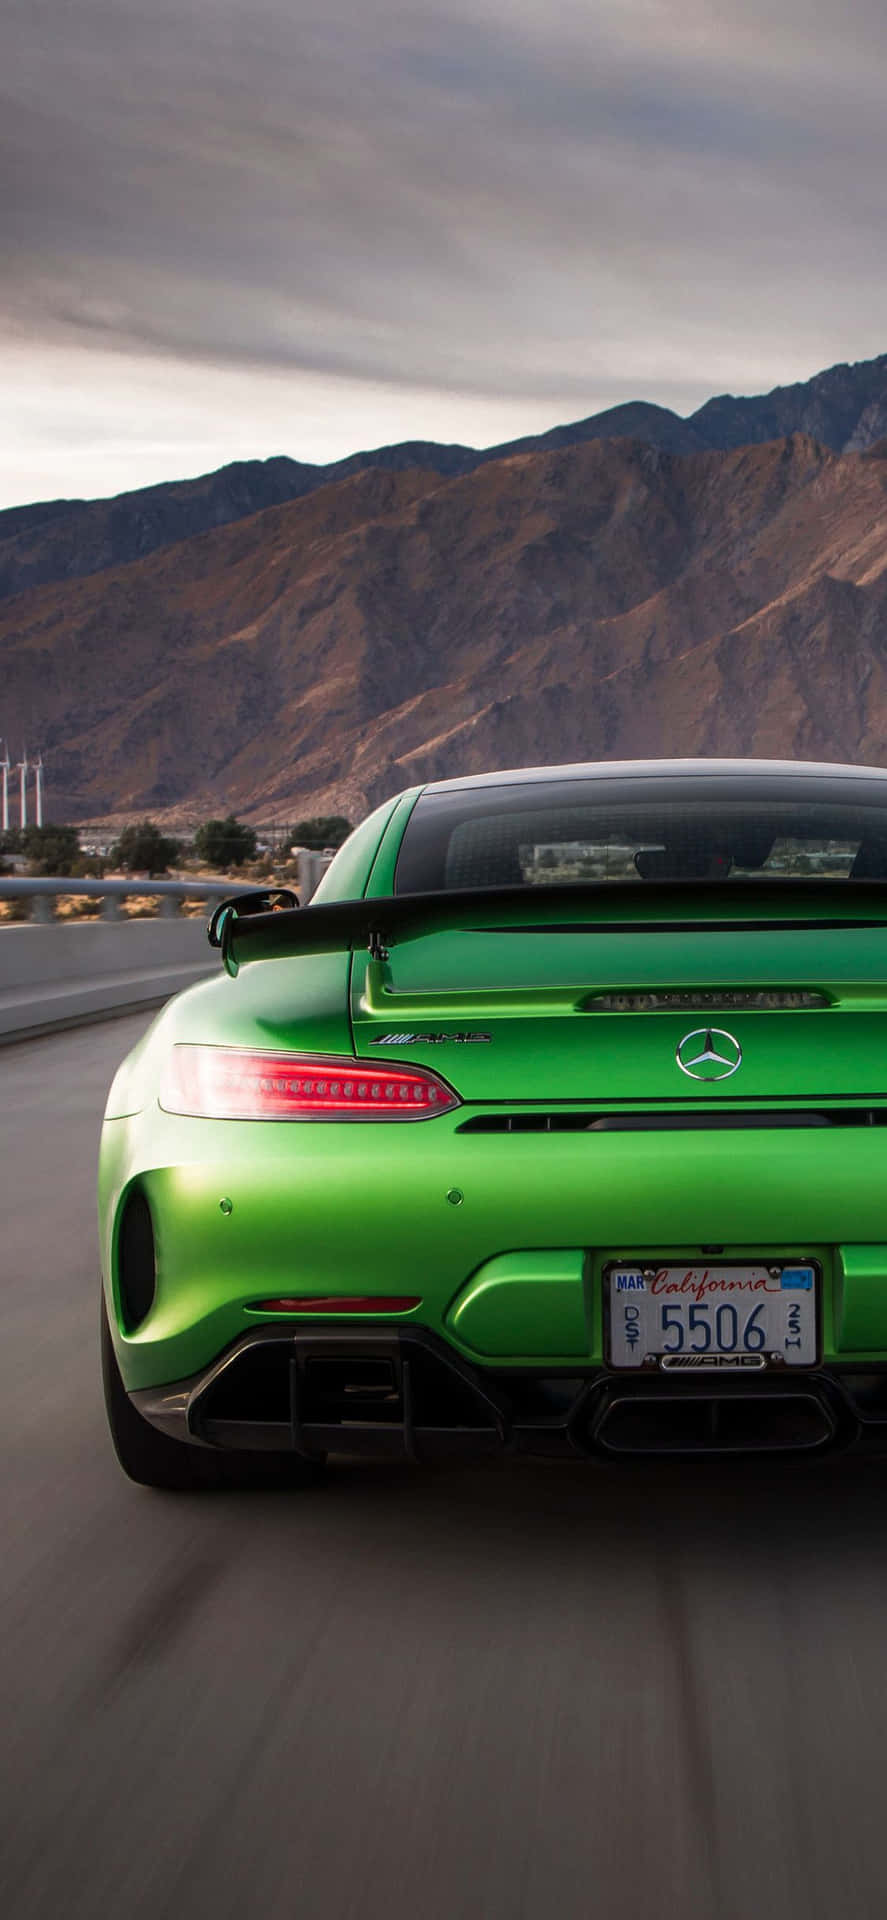 Green Mercedes Gts Back View Wallpaper